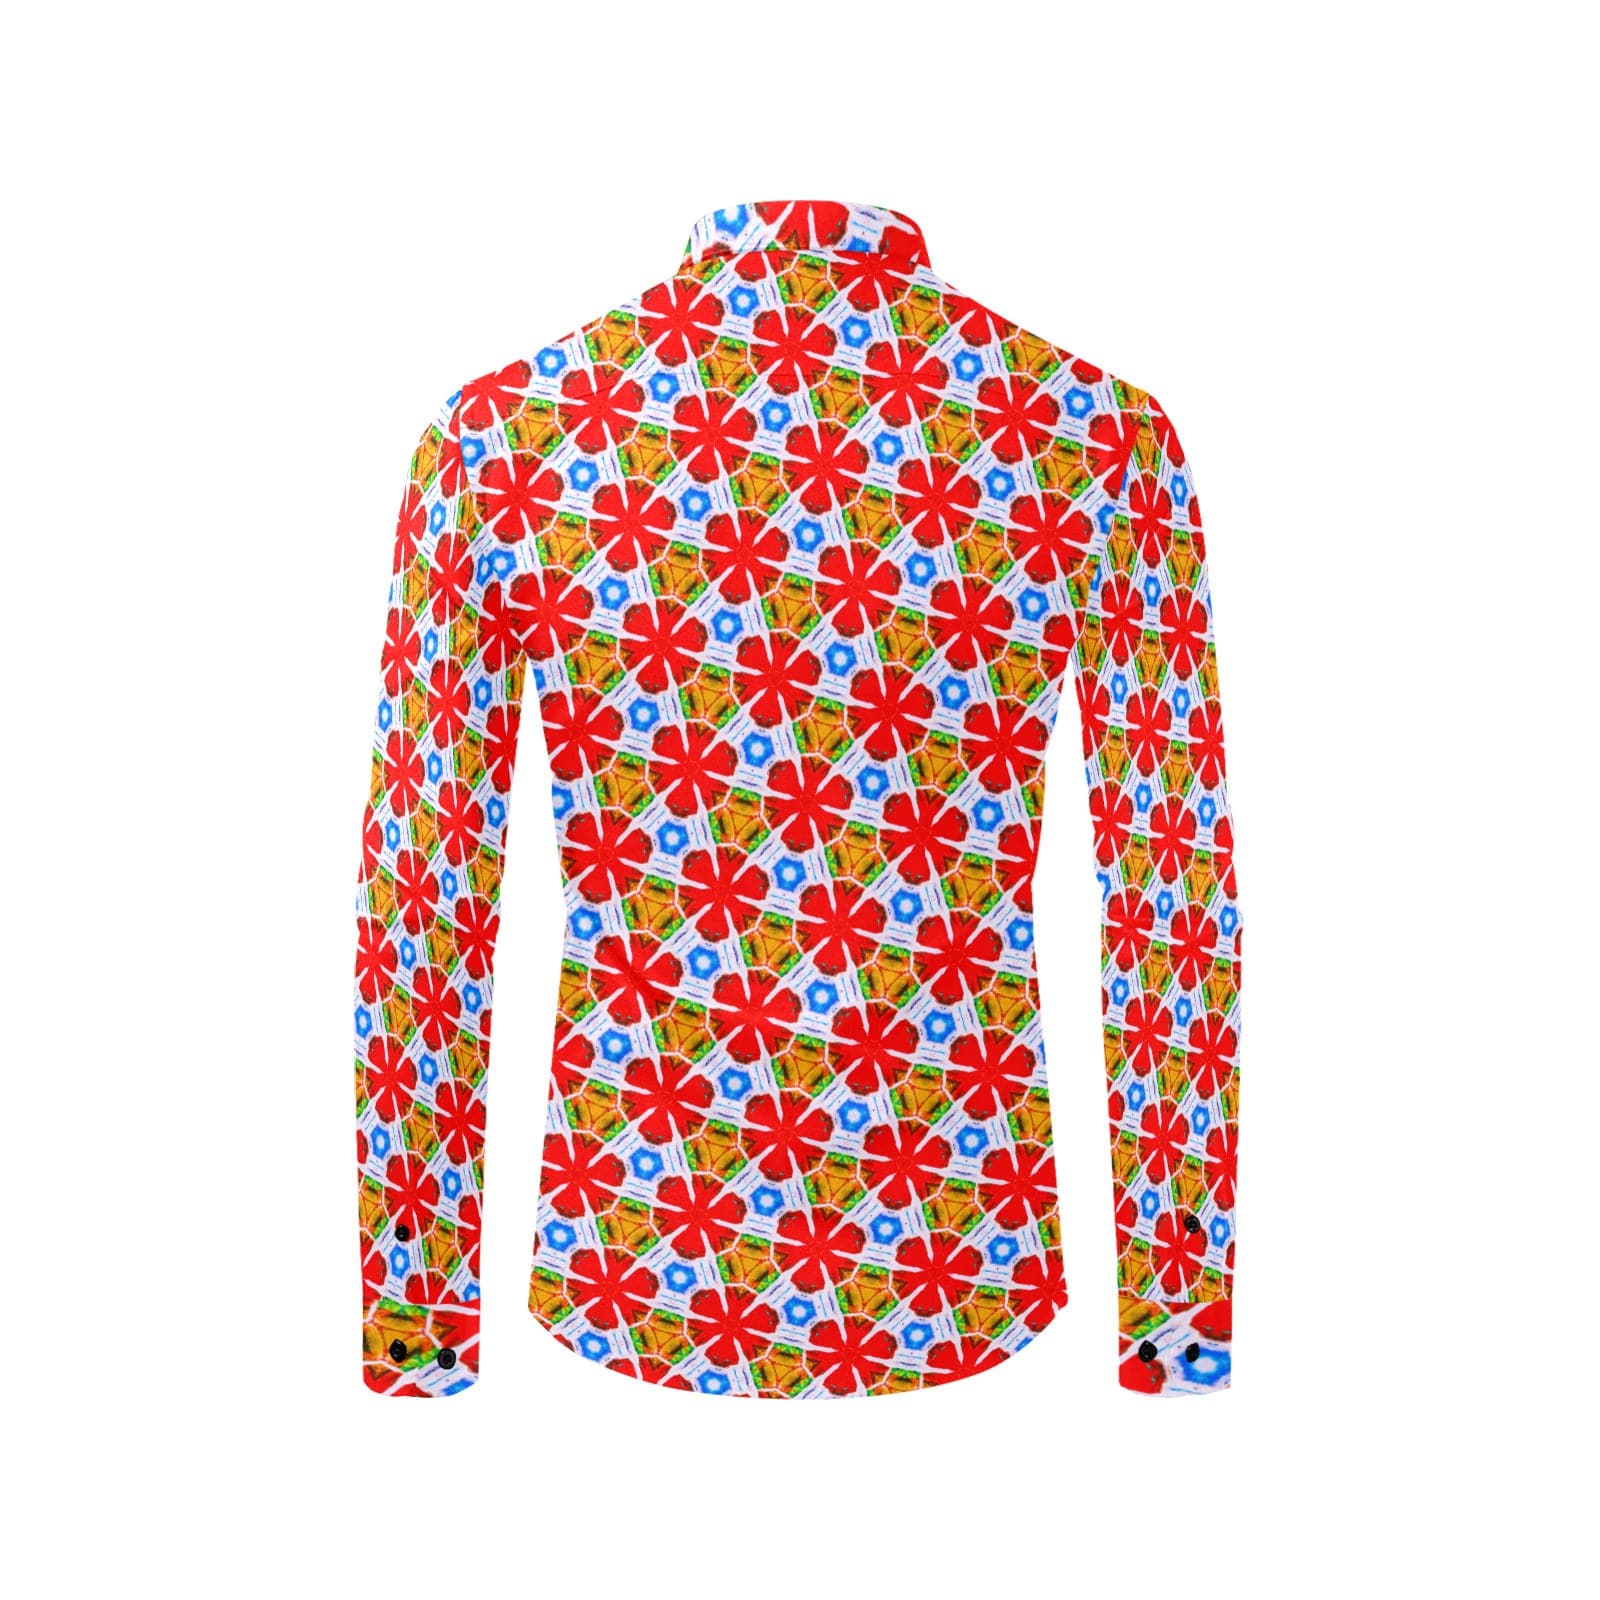 Colorful Red Orange and Blue Mix Patterned Sensus Studio Designed Men's Long Sleeve Shirt